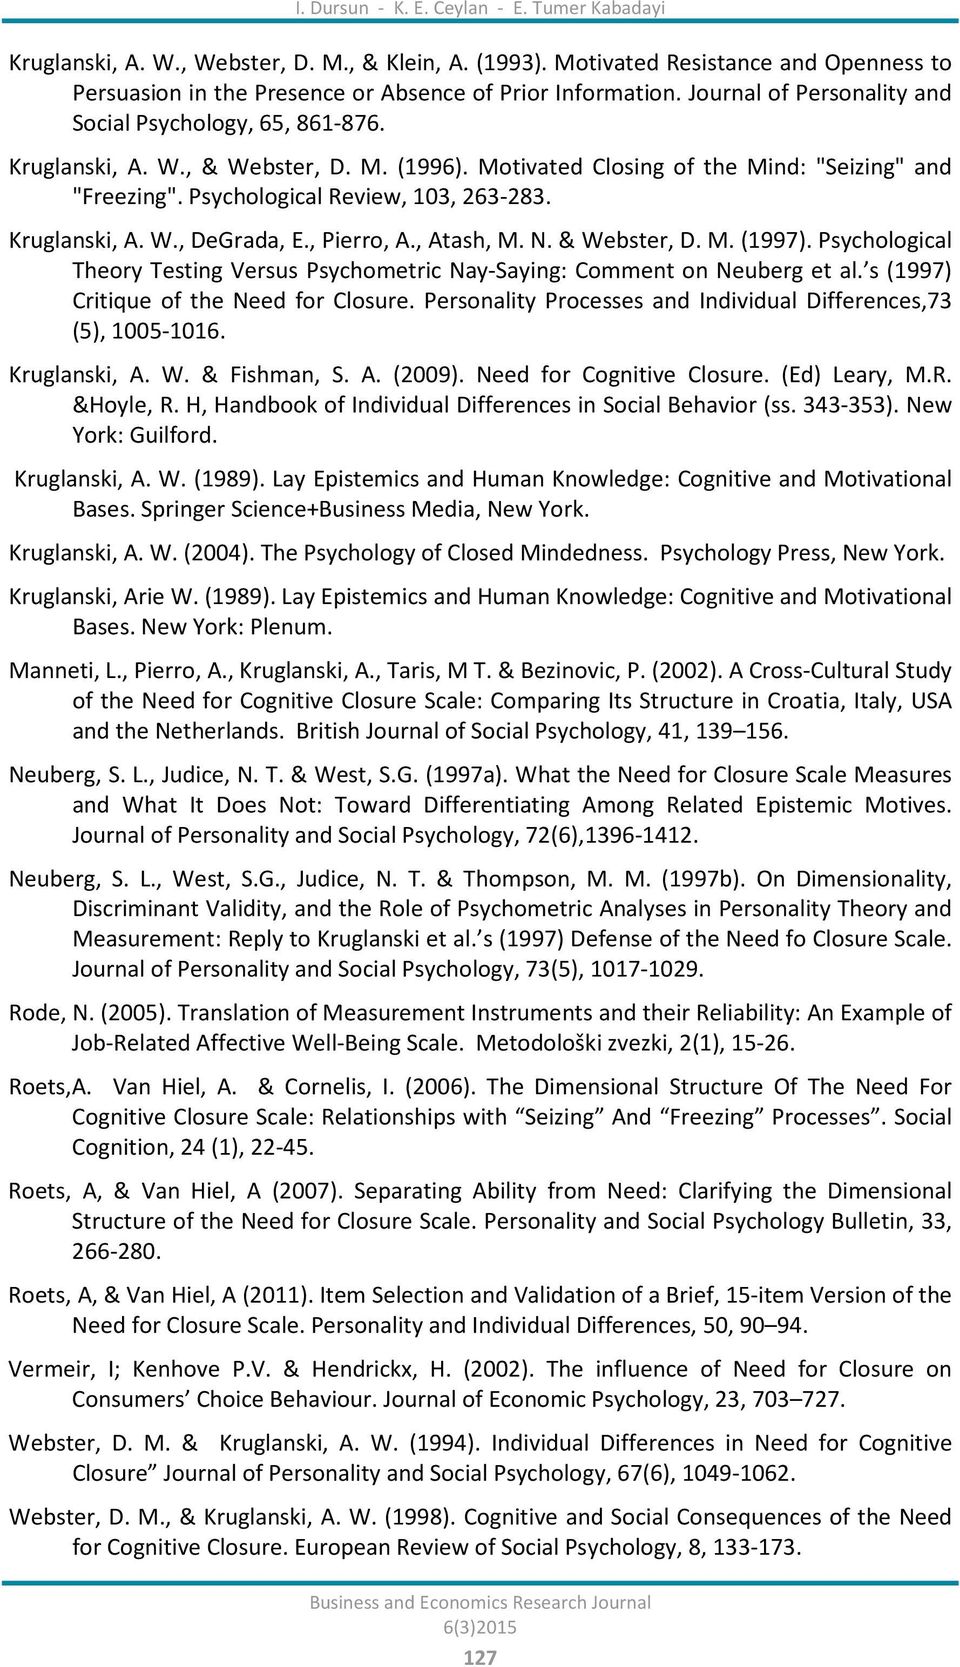 Kruglanski, A. W., DeGrada, E., Pierro, A., Atash, M. N. & Webster, D. M. (1997). Psychological Theory Testing Versus Psychometric Nay-Saying: Comment on Neuberg et al.